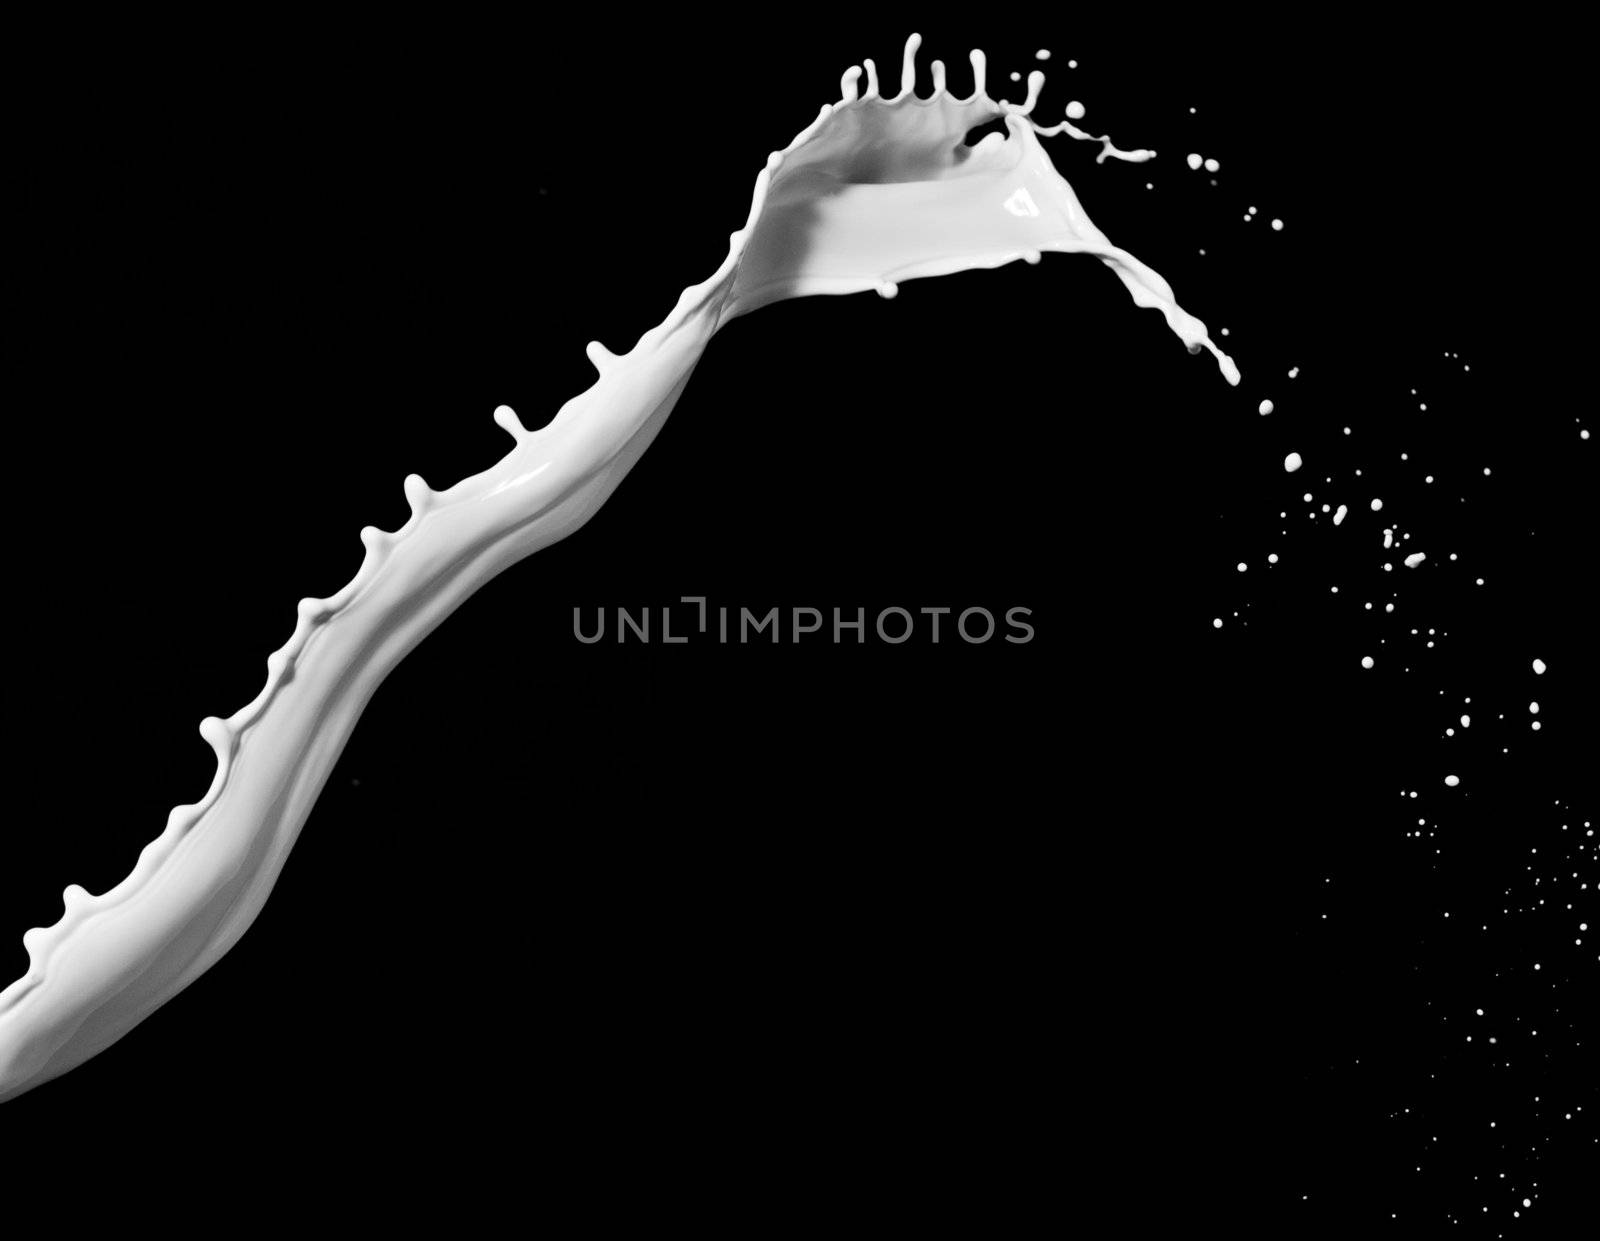 Milk splash isolated against a black background